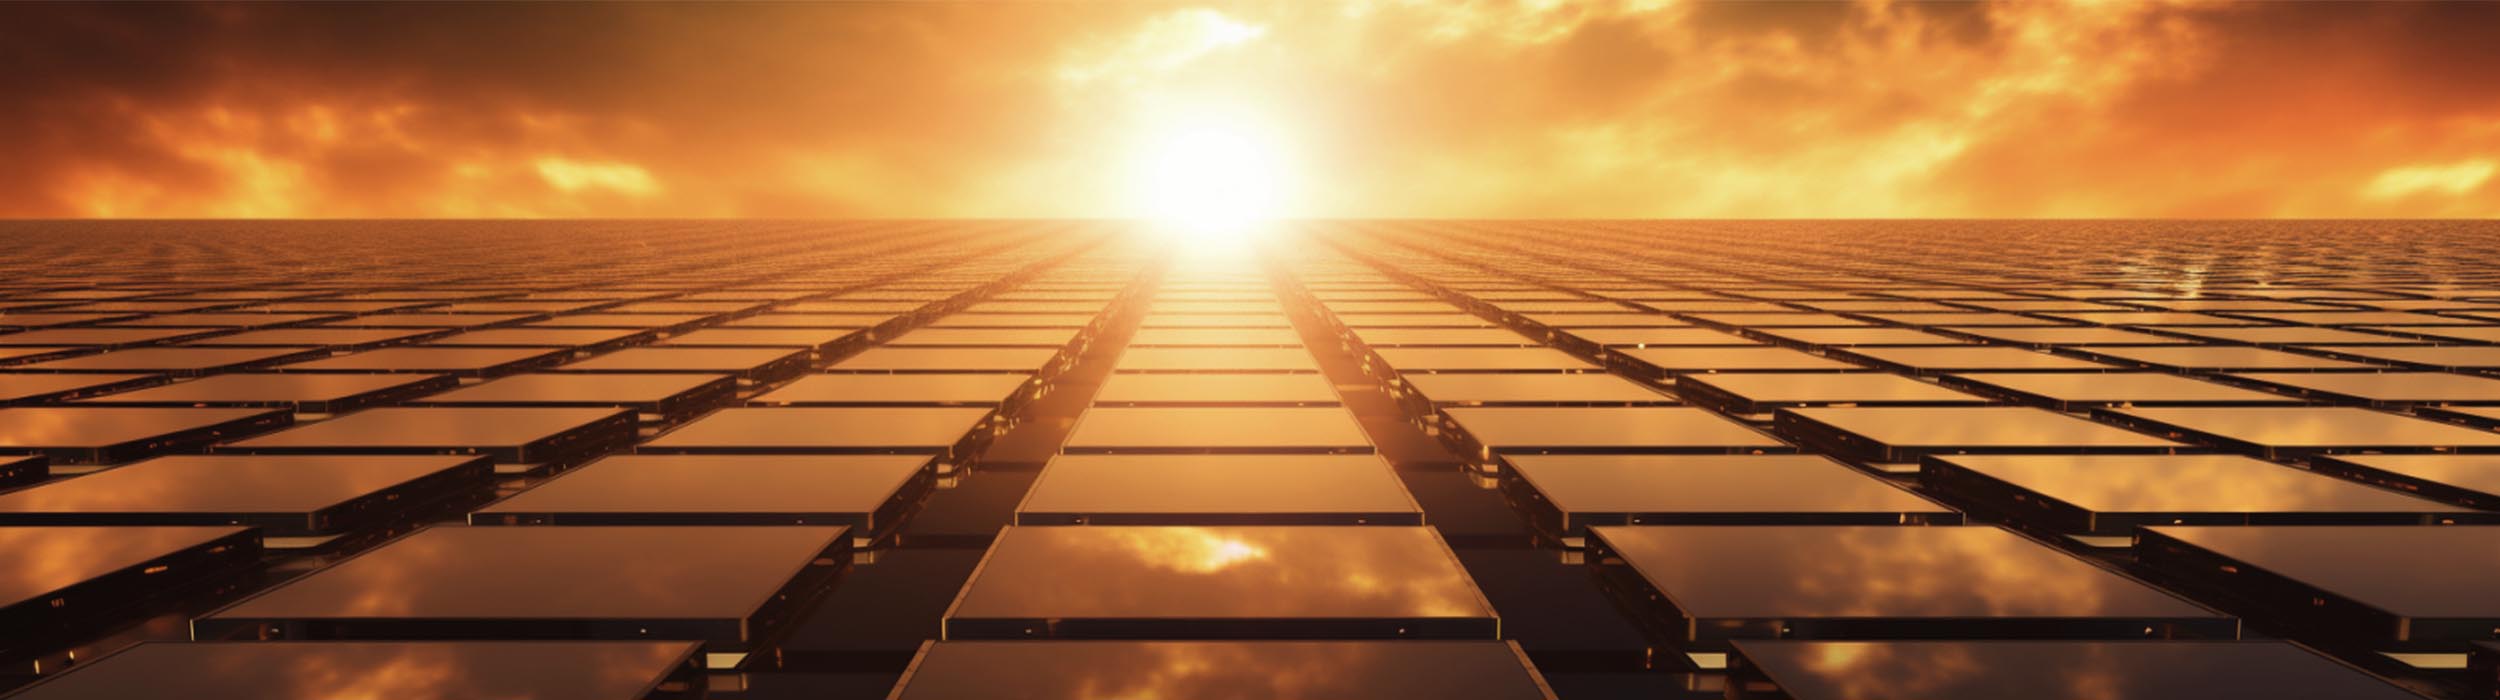 OMNIA SOLAR pannelli solari monocristallini ad alta efficienza